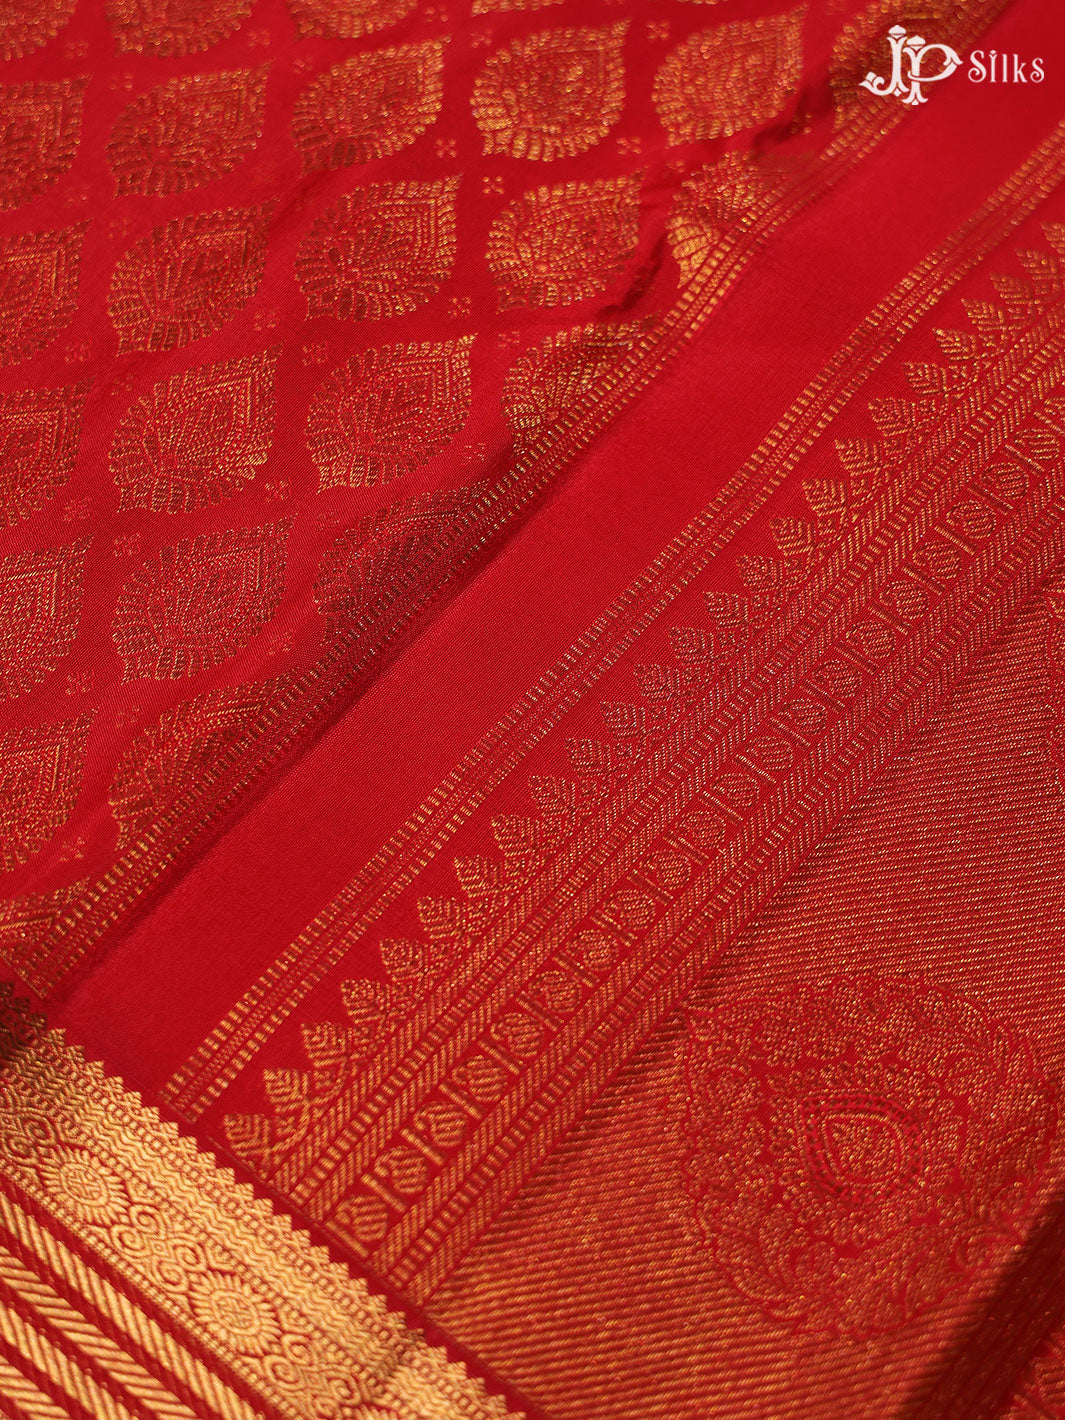 Red Kanchipuram Silk Saree - E4581 - View 6